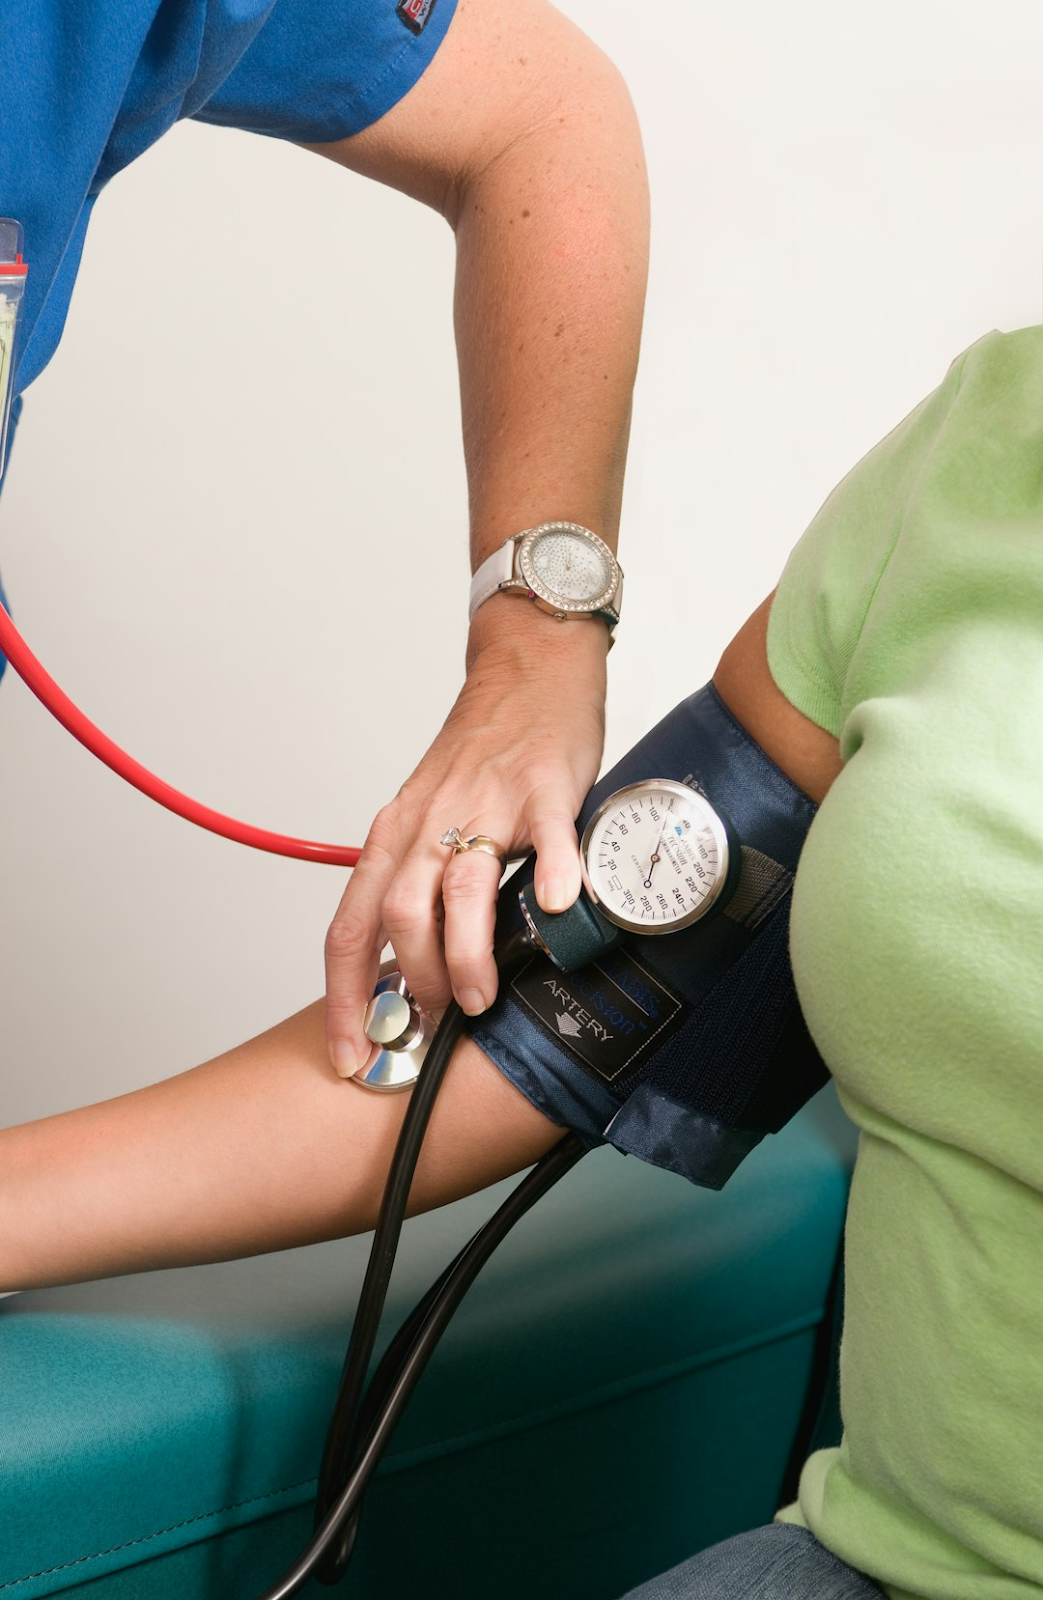 placental abruption cause - high blood pressure